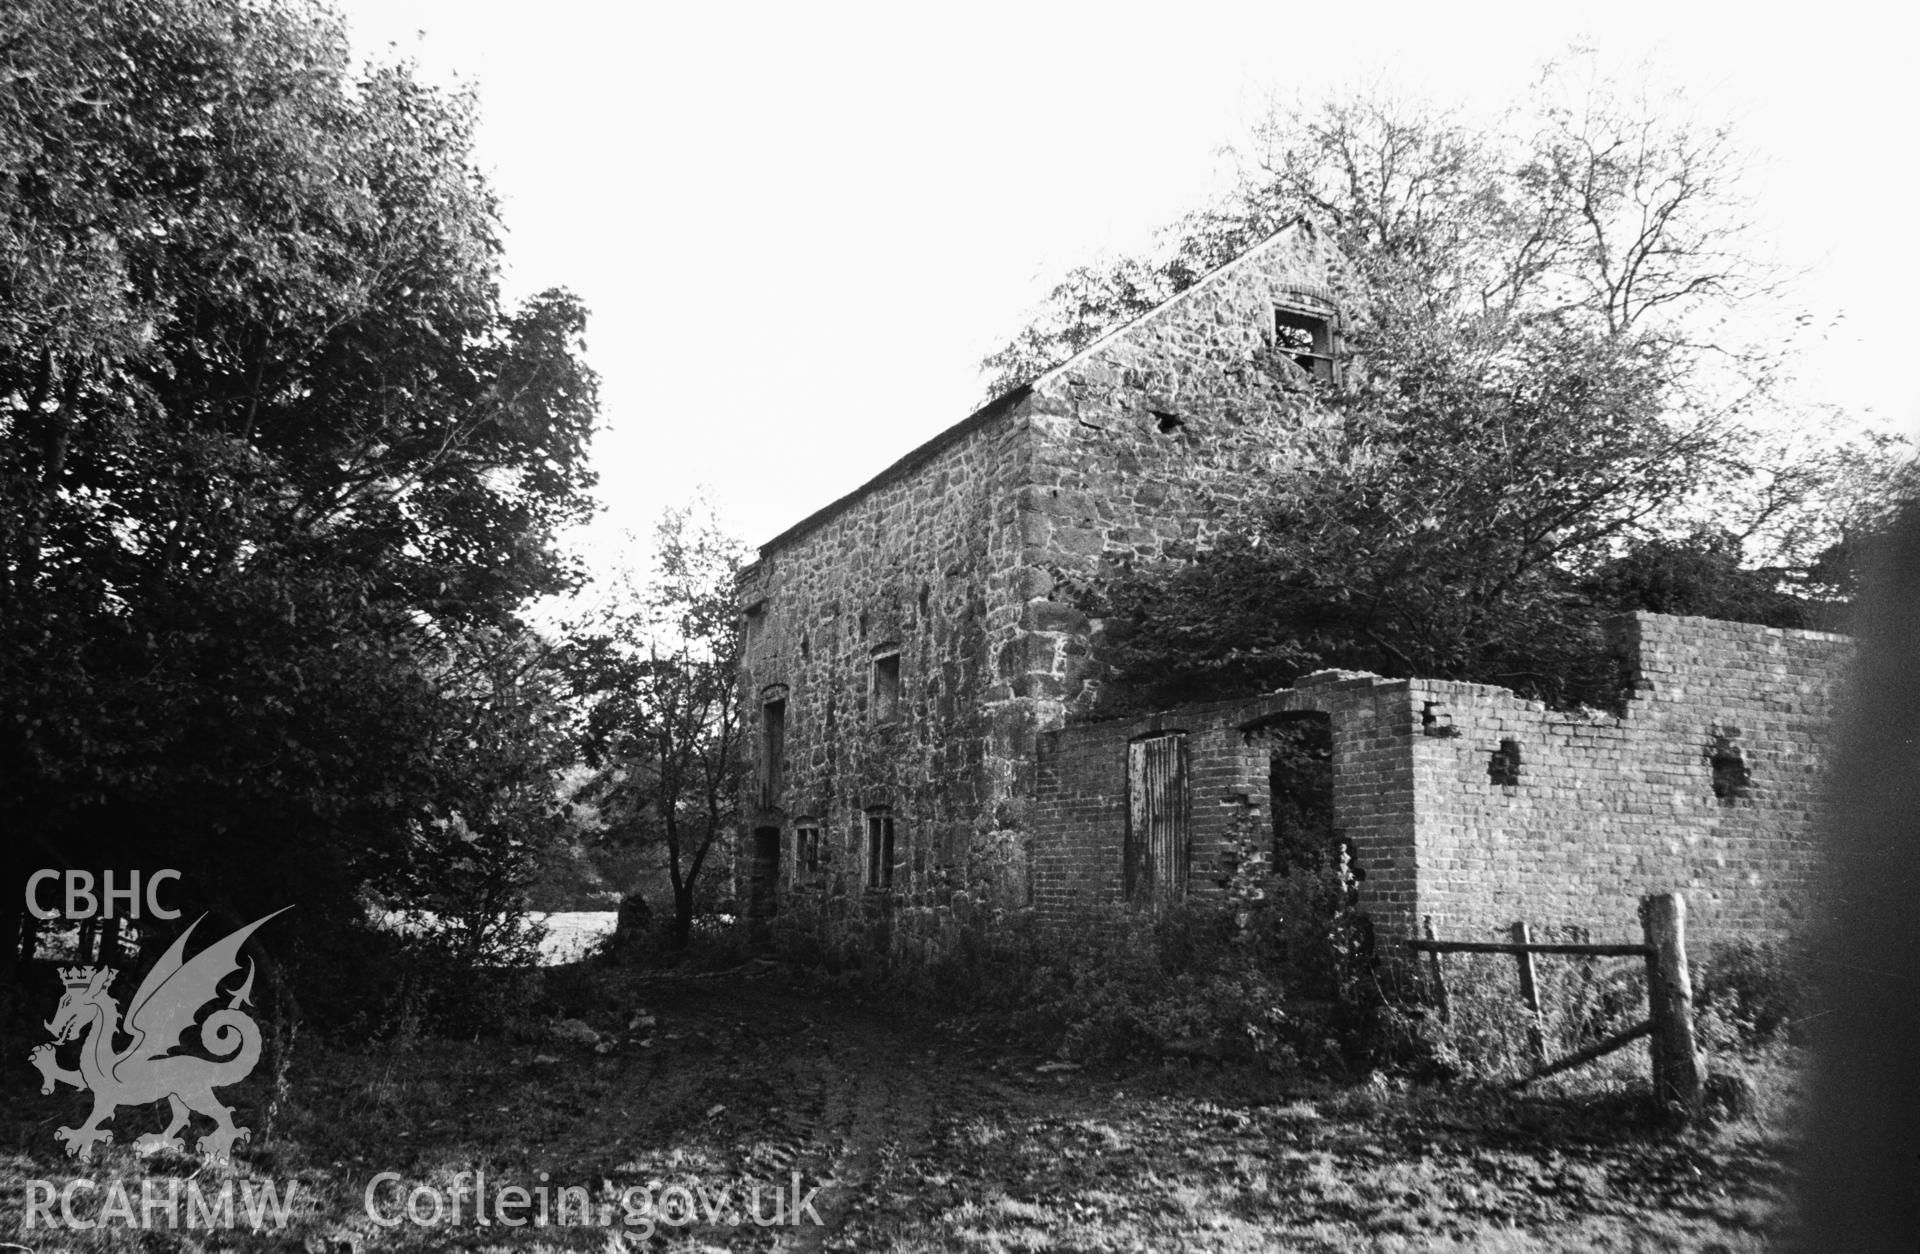 Pontysgawryd Corn Mill; photo survey comprising 9 B&W prints taken by Brian Malaws, dated 25th October 1997.  Negatives held.